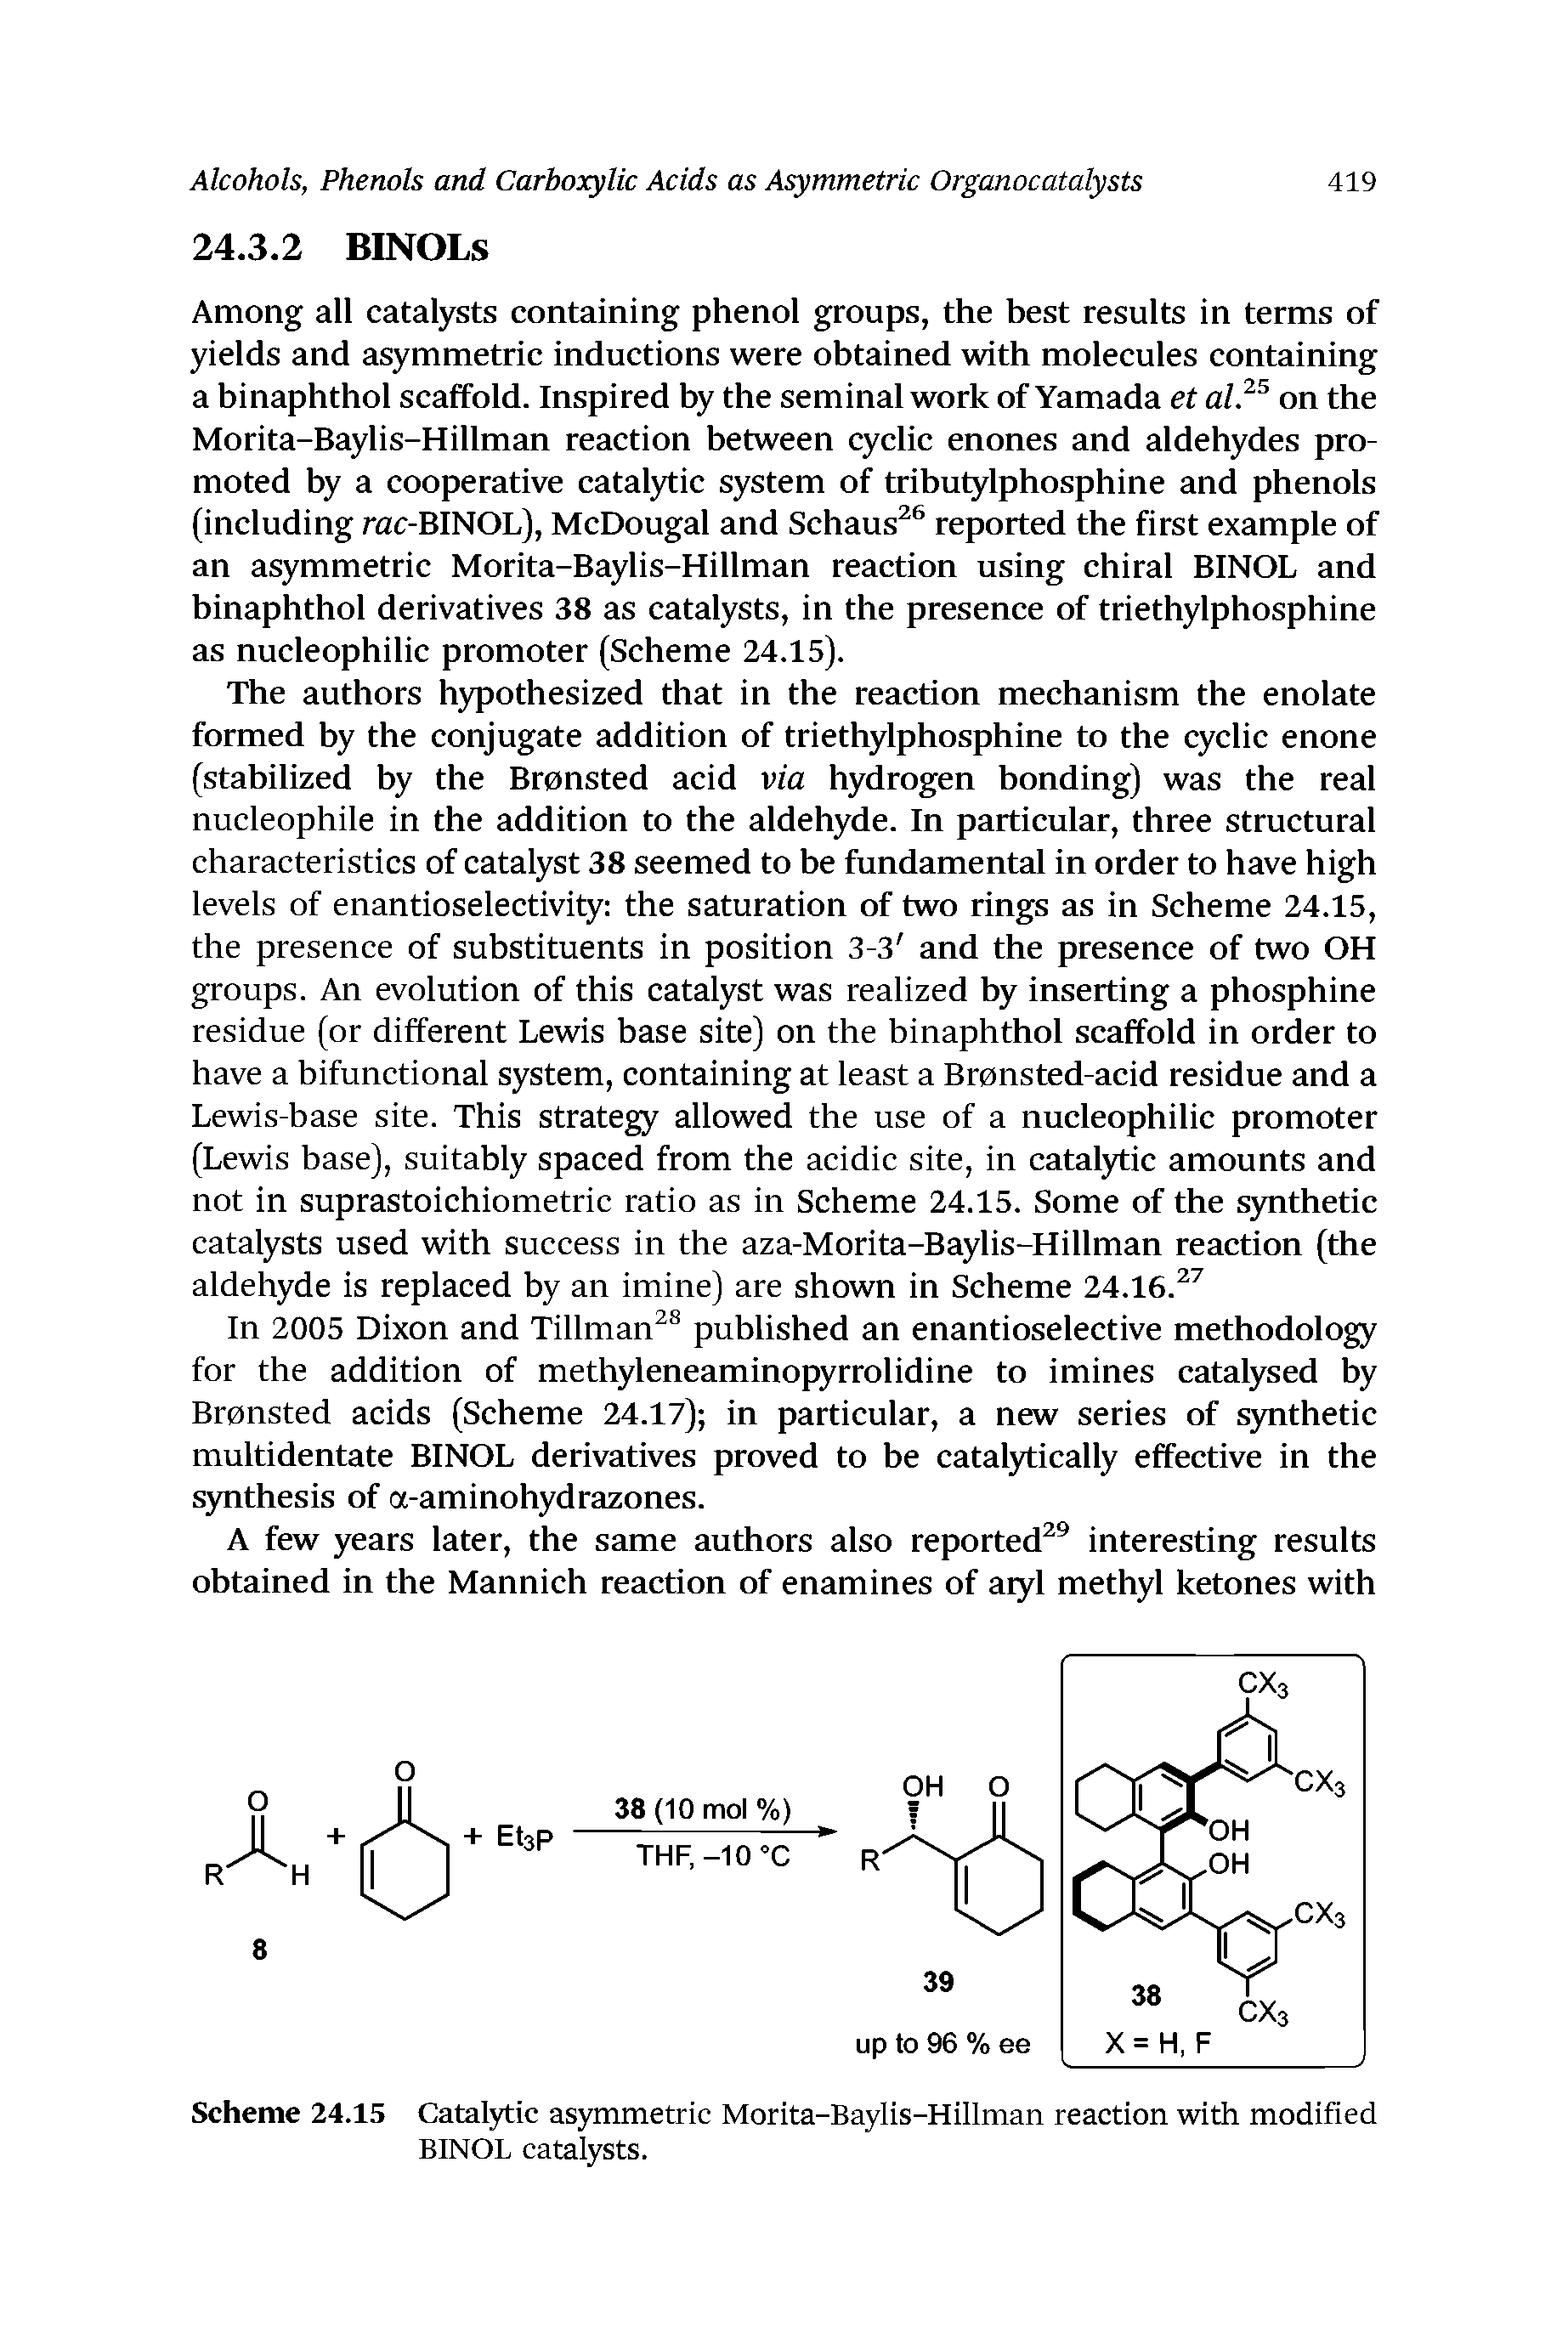 Scheme 24.15 Catalytic asymmetric Morita-Baylis-Hillman reaction with modified BINOL catalysts.